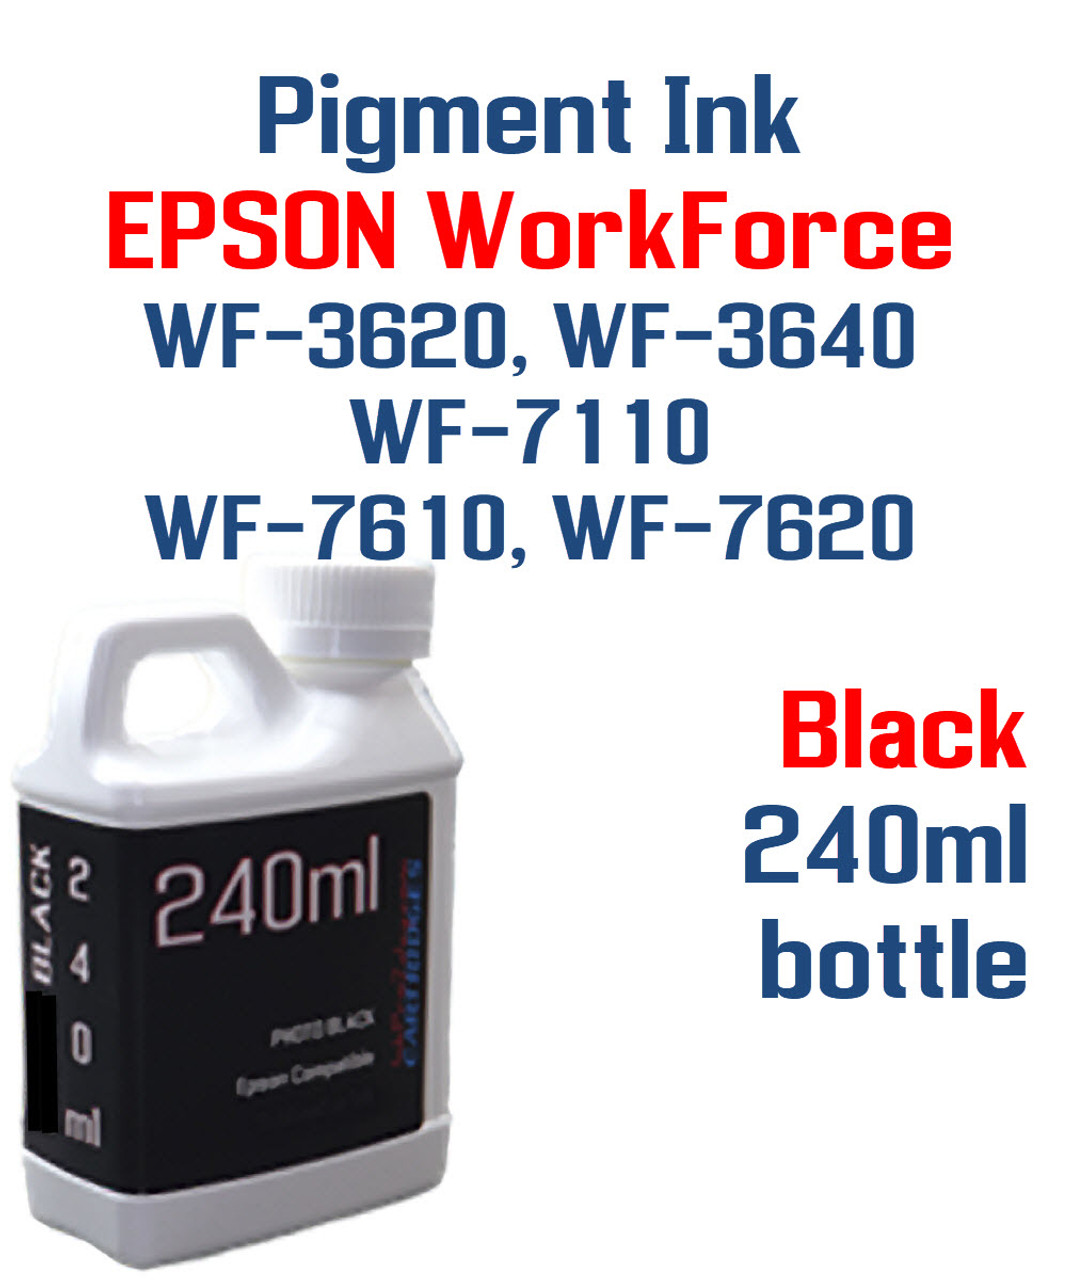 Black Pigment ink 240ml bottle Epson WF-3640 WF-7110 WF-7610 WF-7620 printers